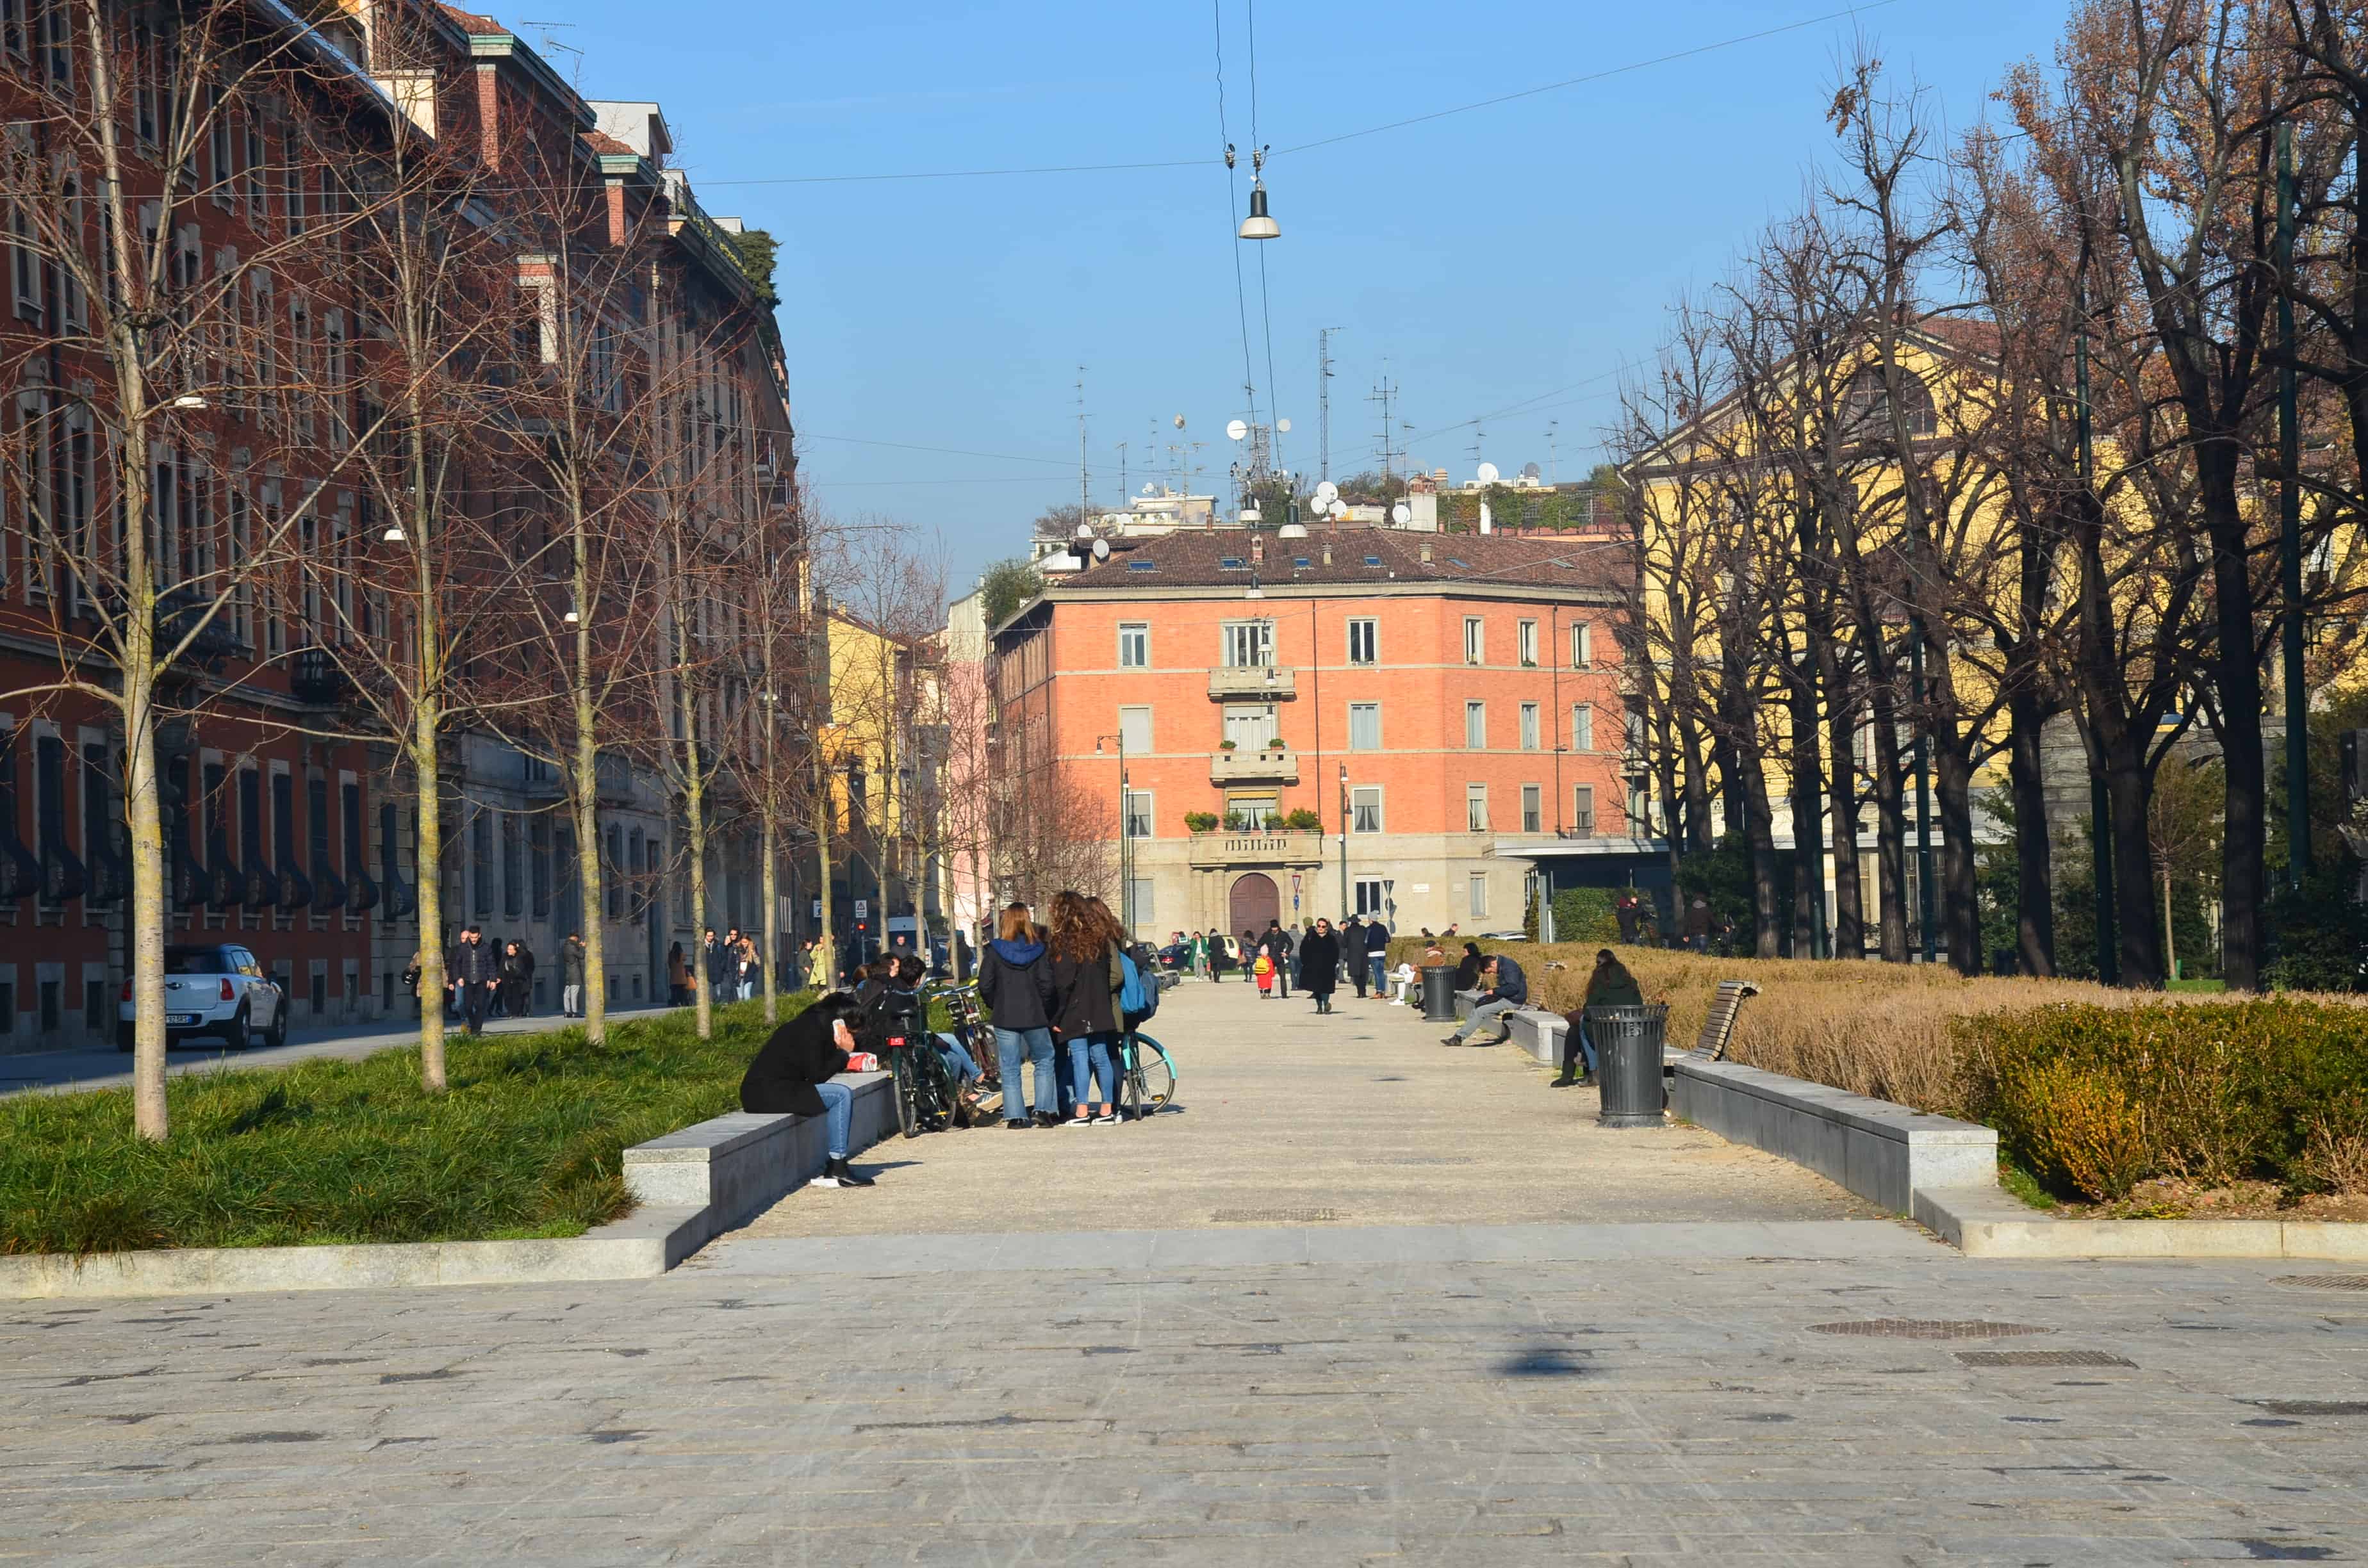 Piazza Sant'Ambrogio in Milan, Italy